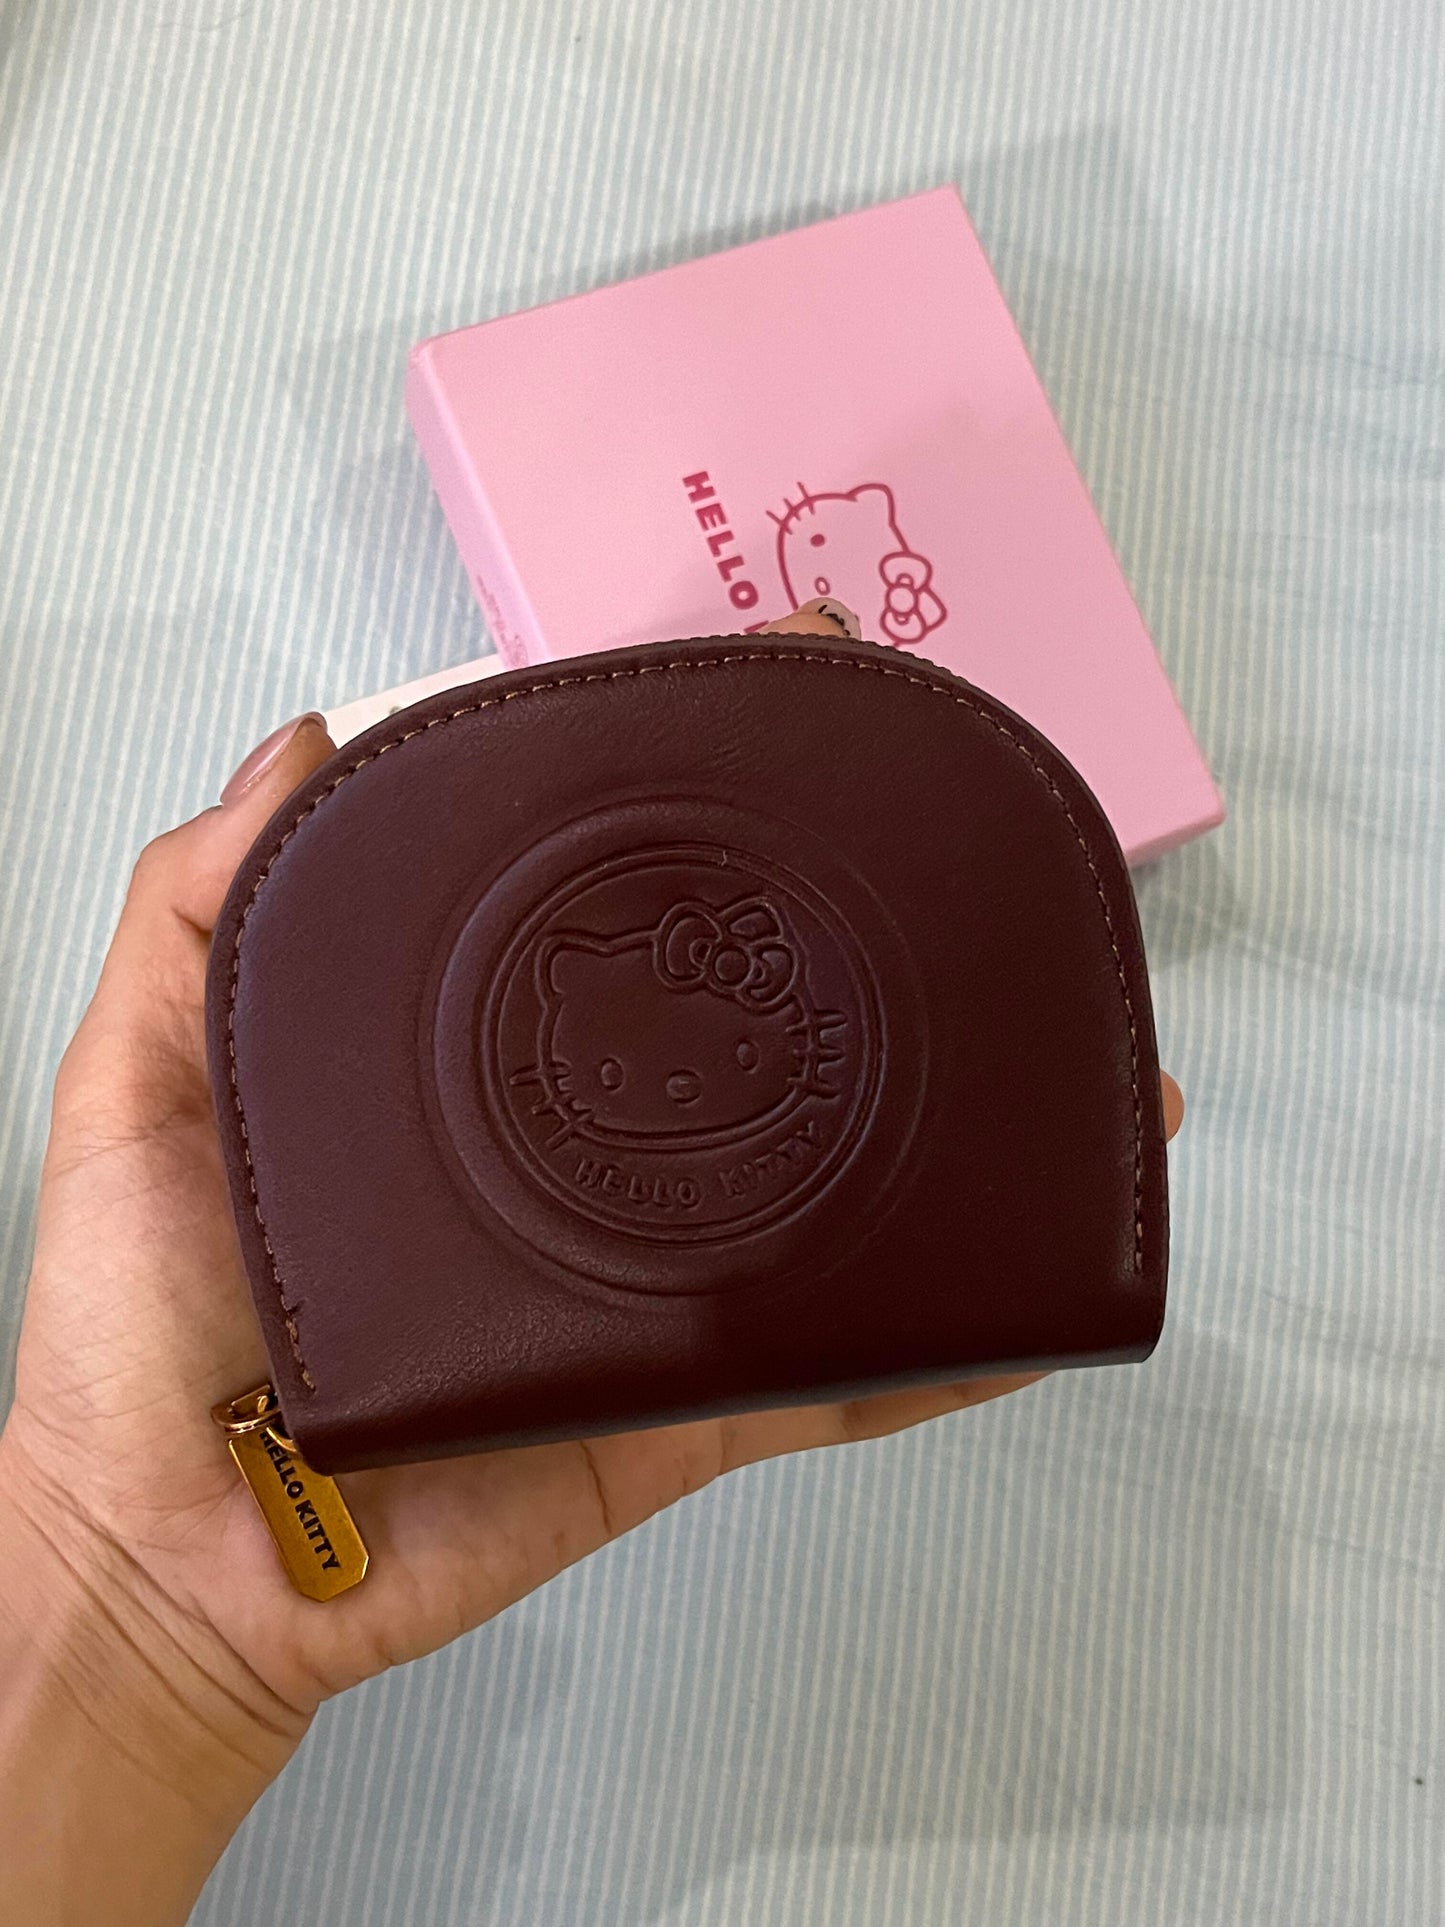 Hellokitty Zipper Card Holder PU Leather Purse Organizer Credit Card Holde (gift box packaging)